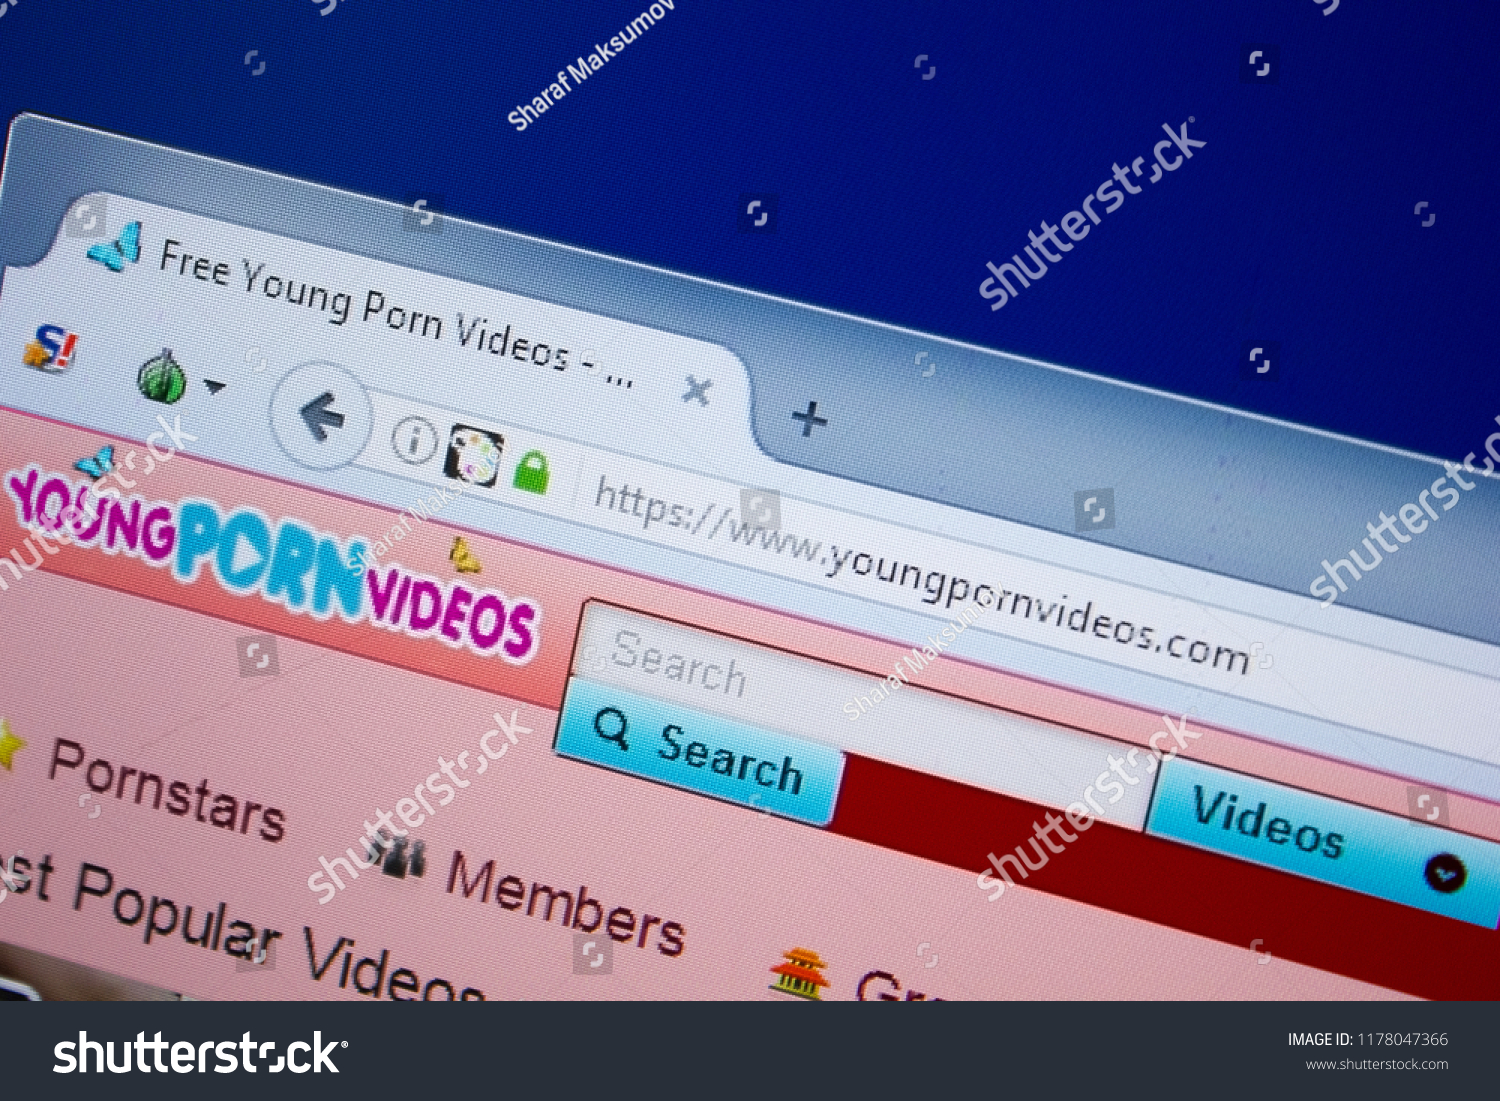 Young Porn Vids